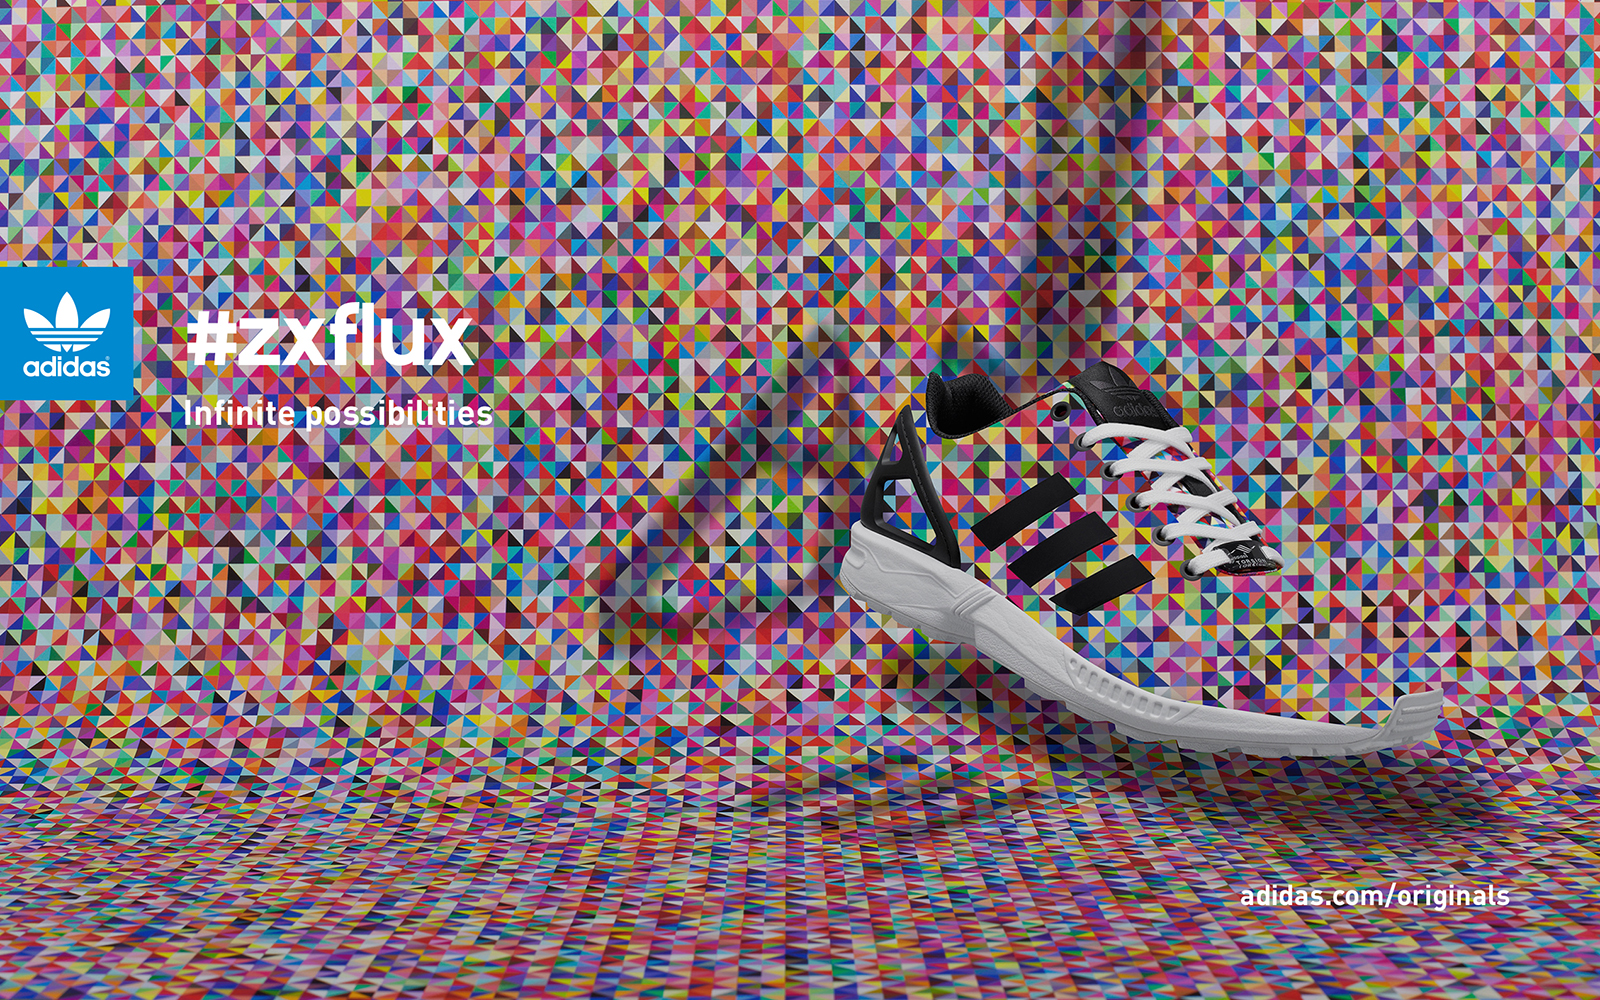 adidas zx flux infinite possibilities